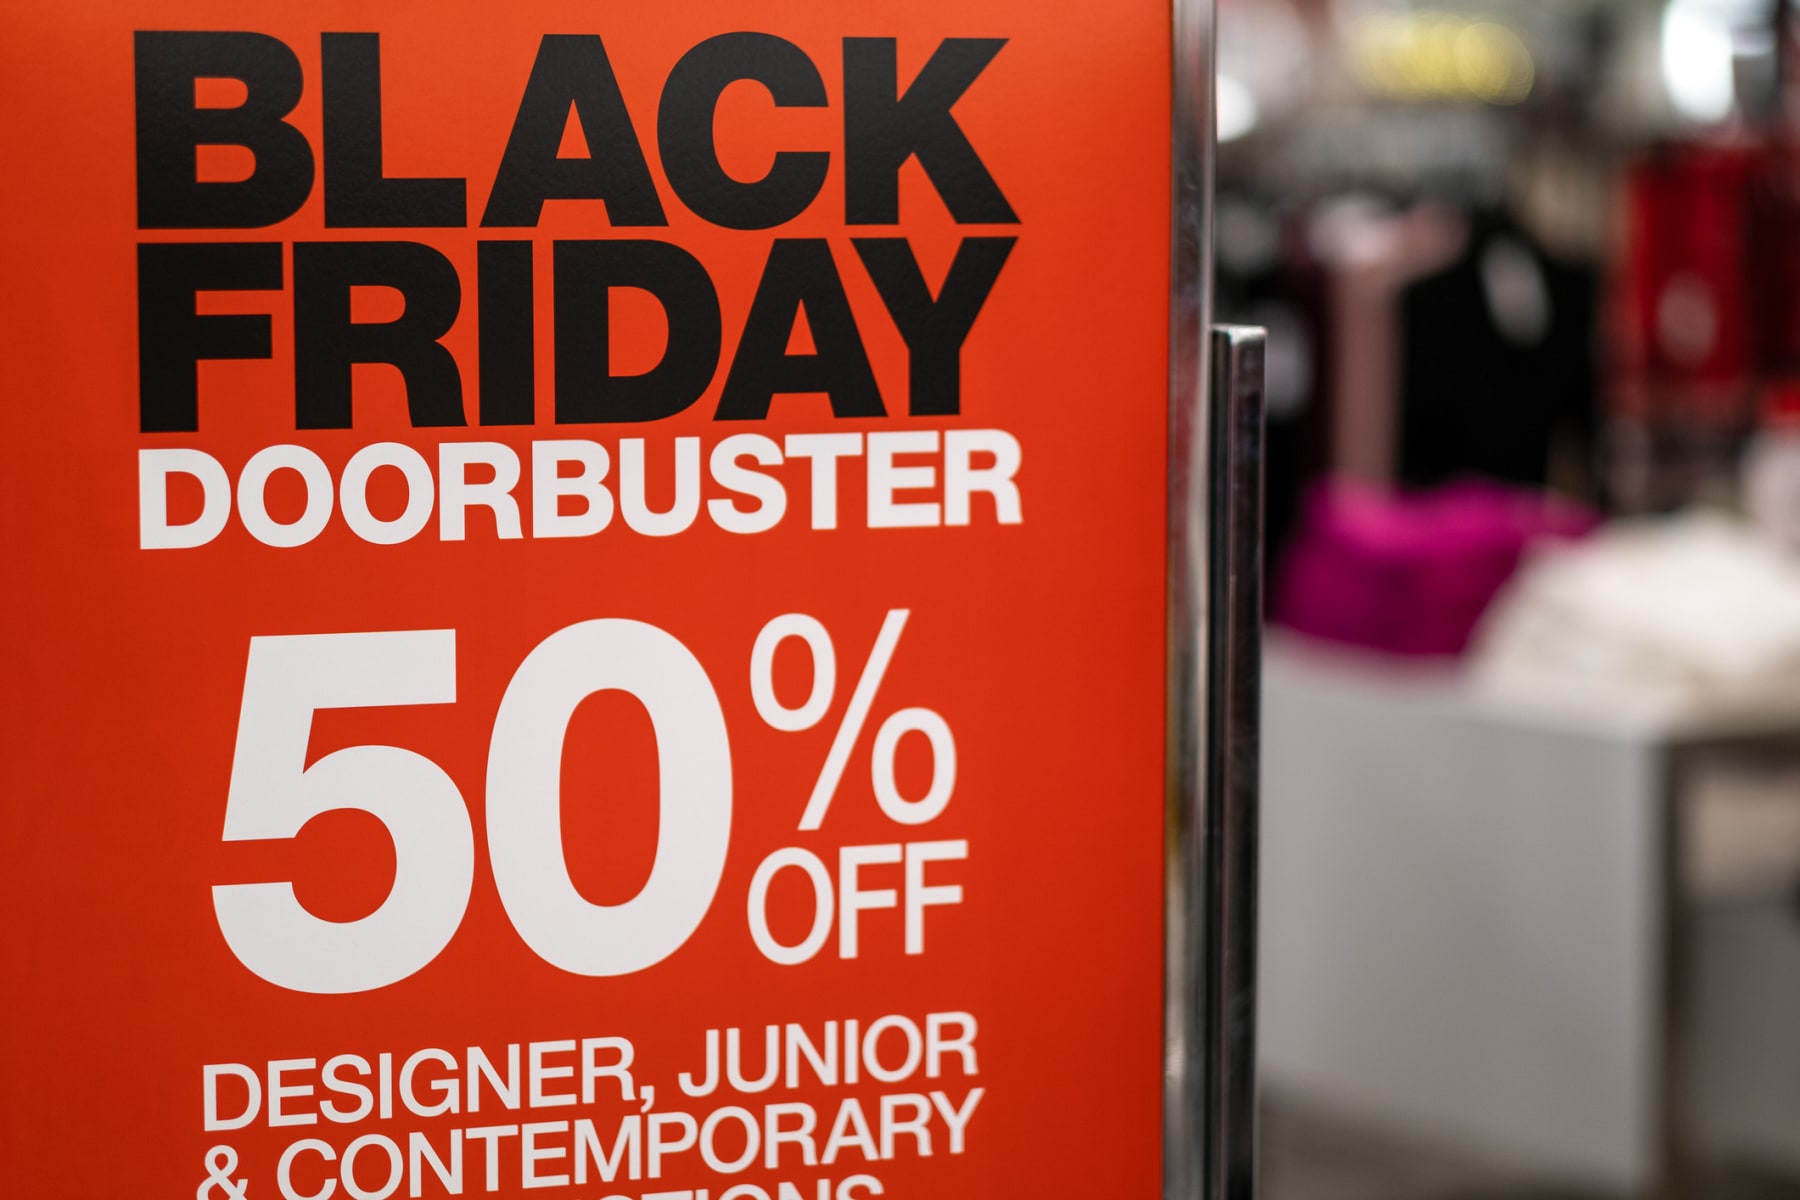 Black Friday doorbuster sign displayed at department store.